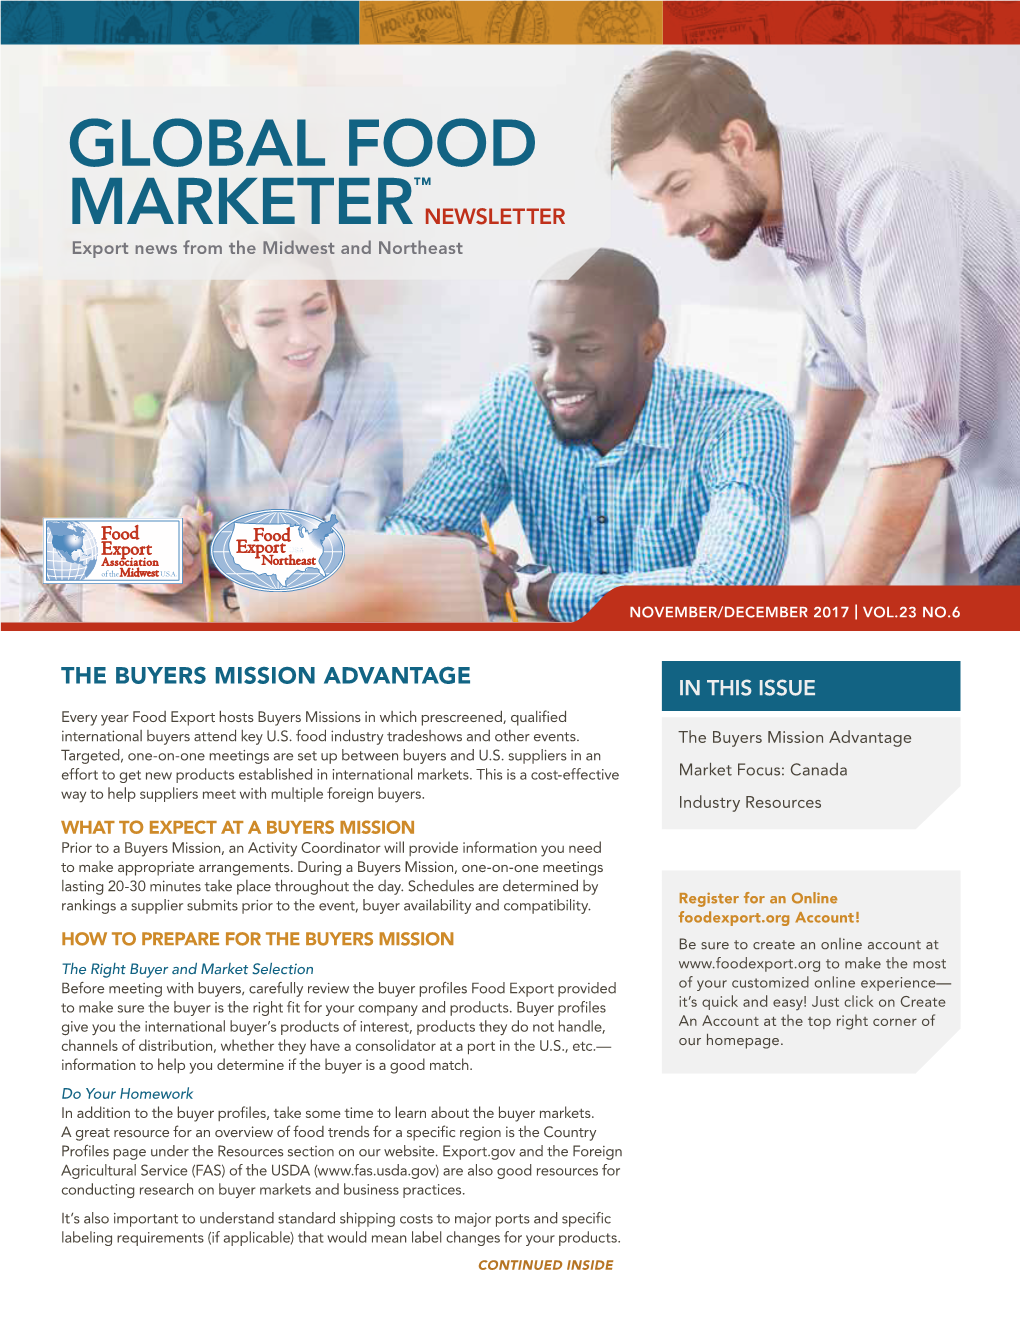 Global Food Marketer™